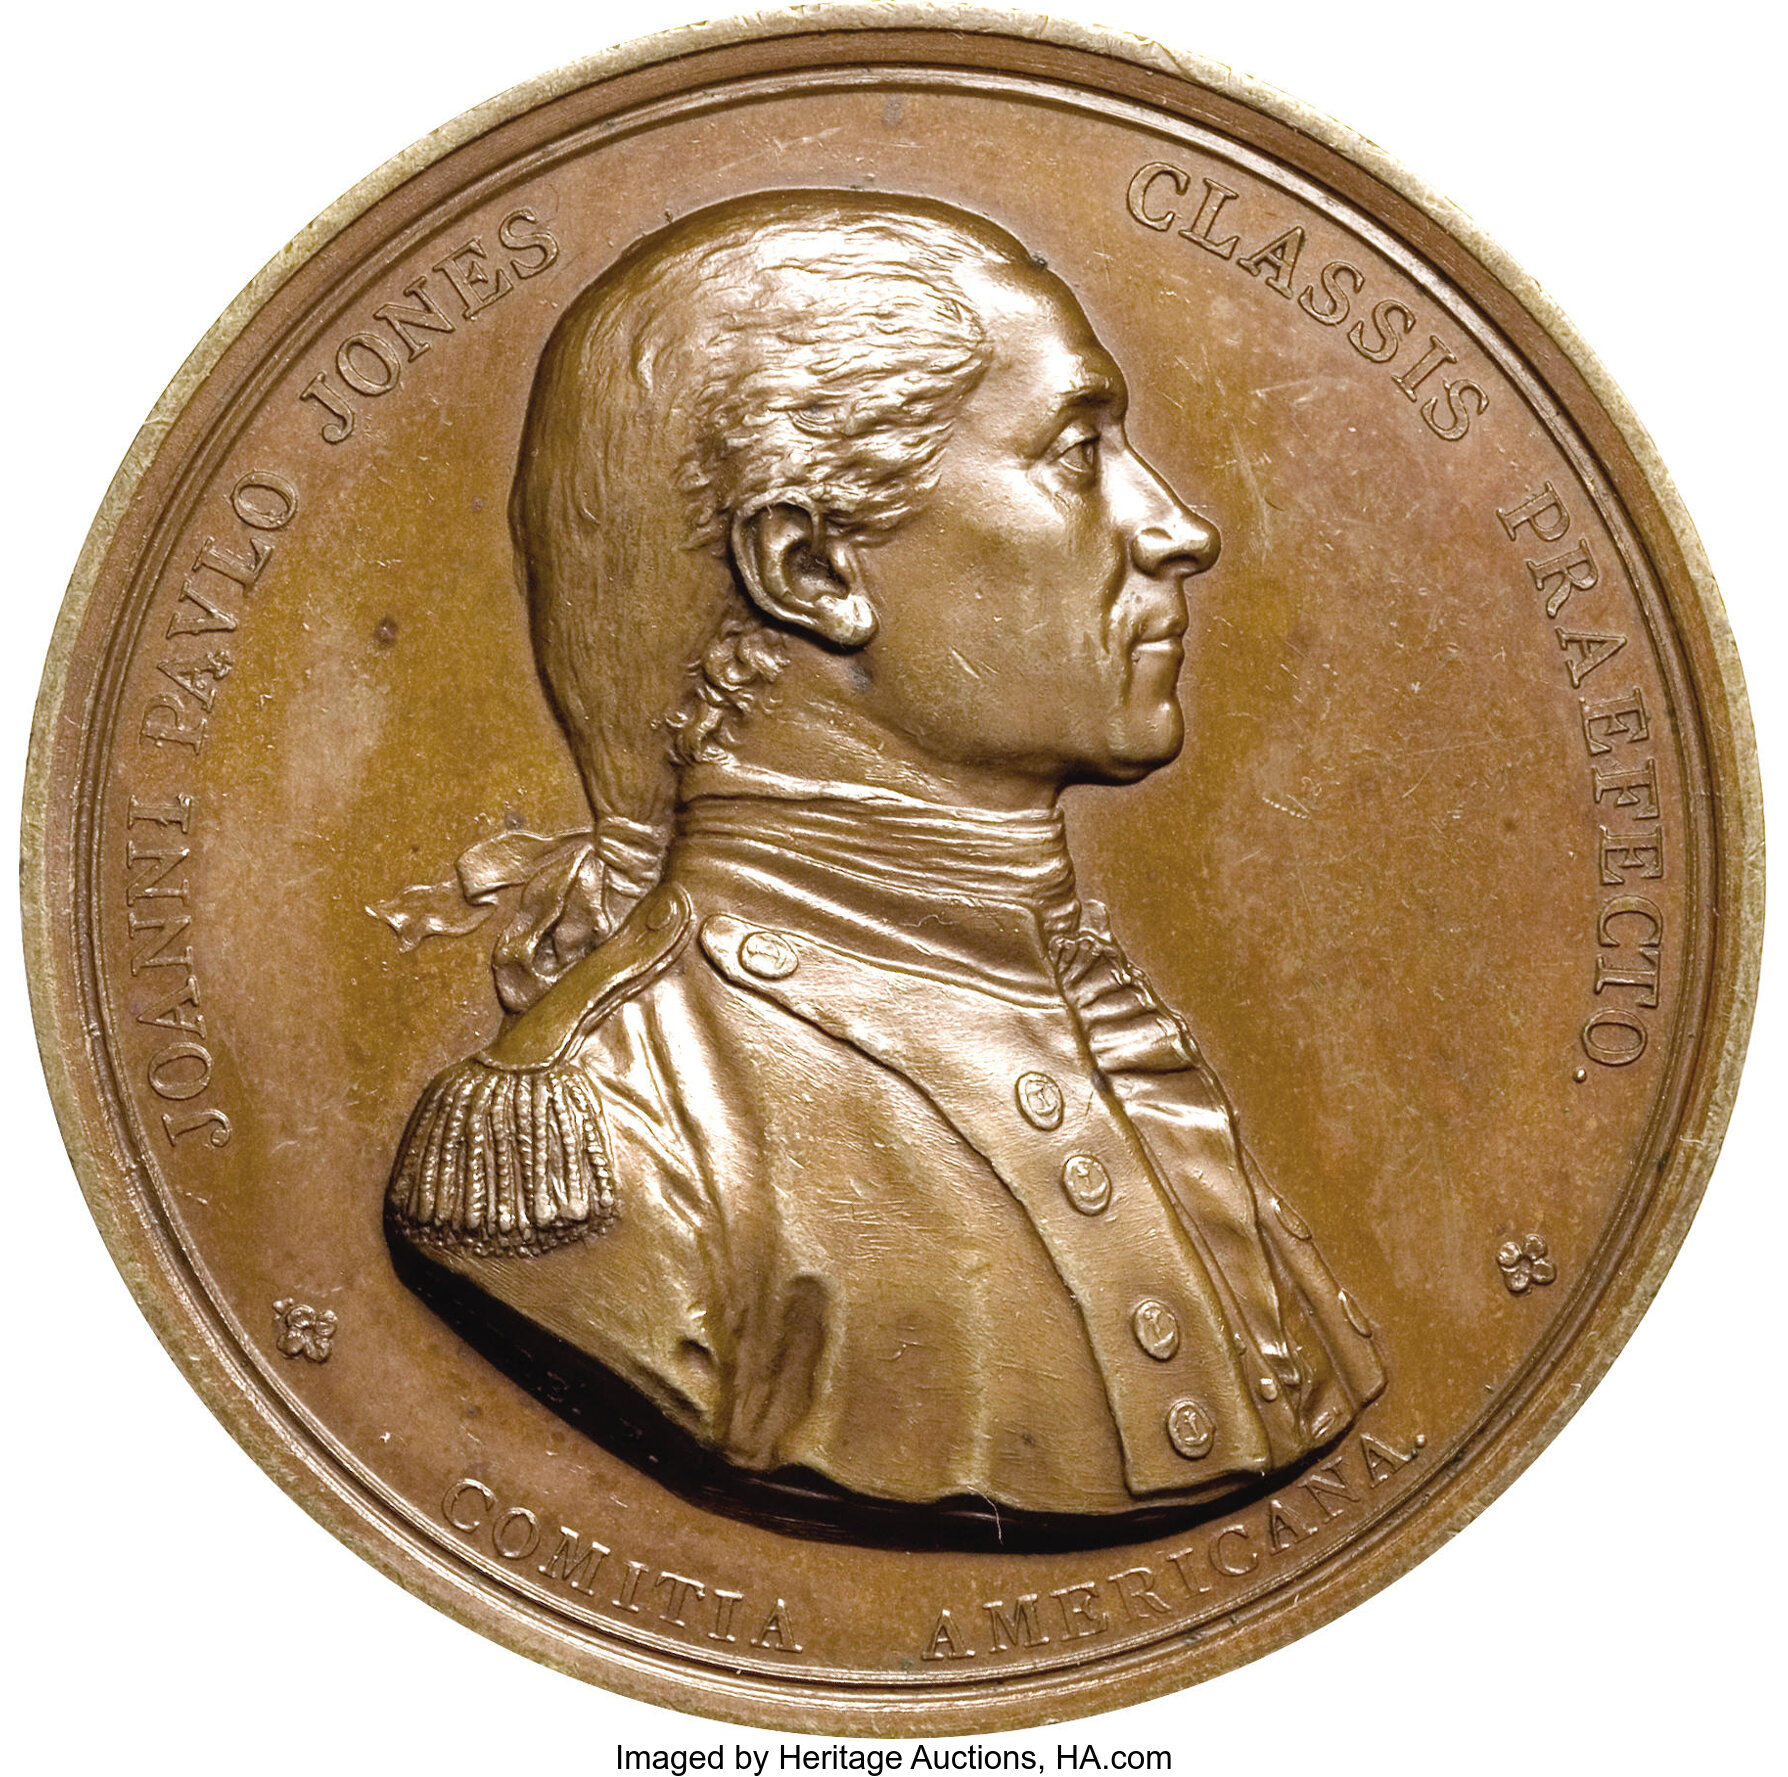 John Paul Jones Naval Mint Medal, (1845-60) Paris Mint Restrike